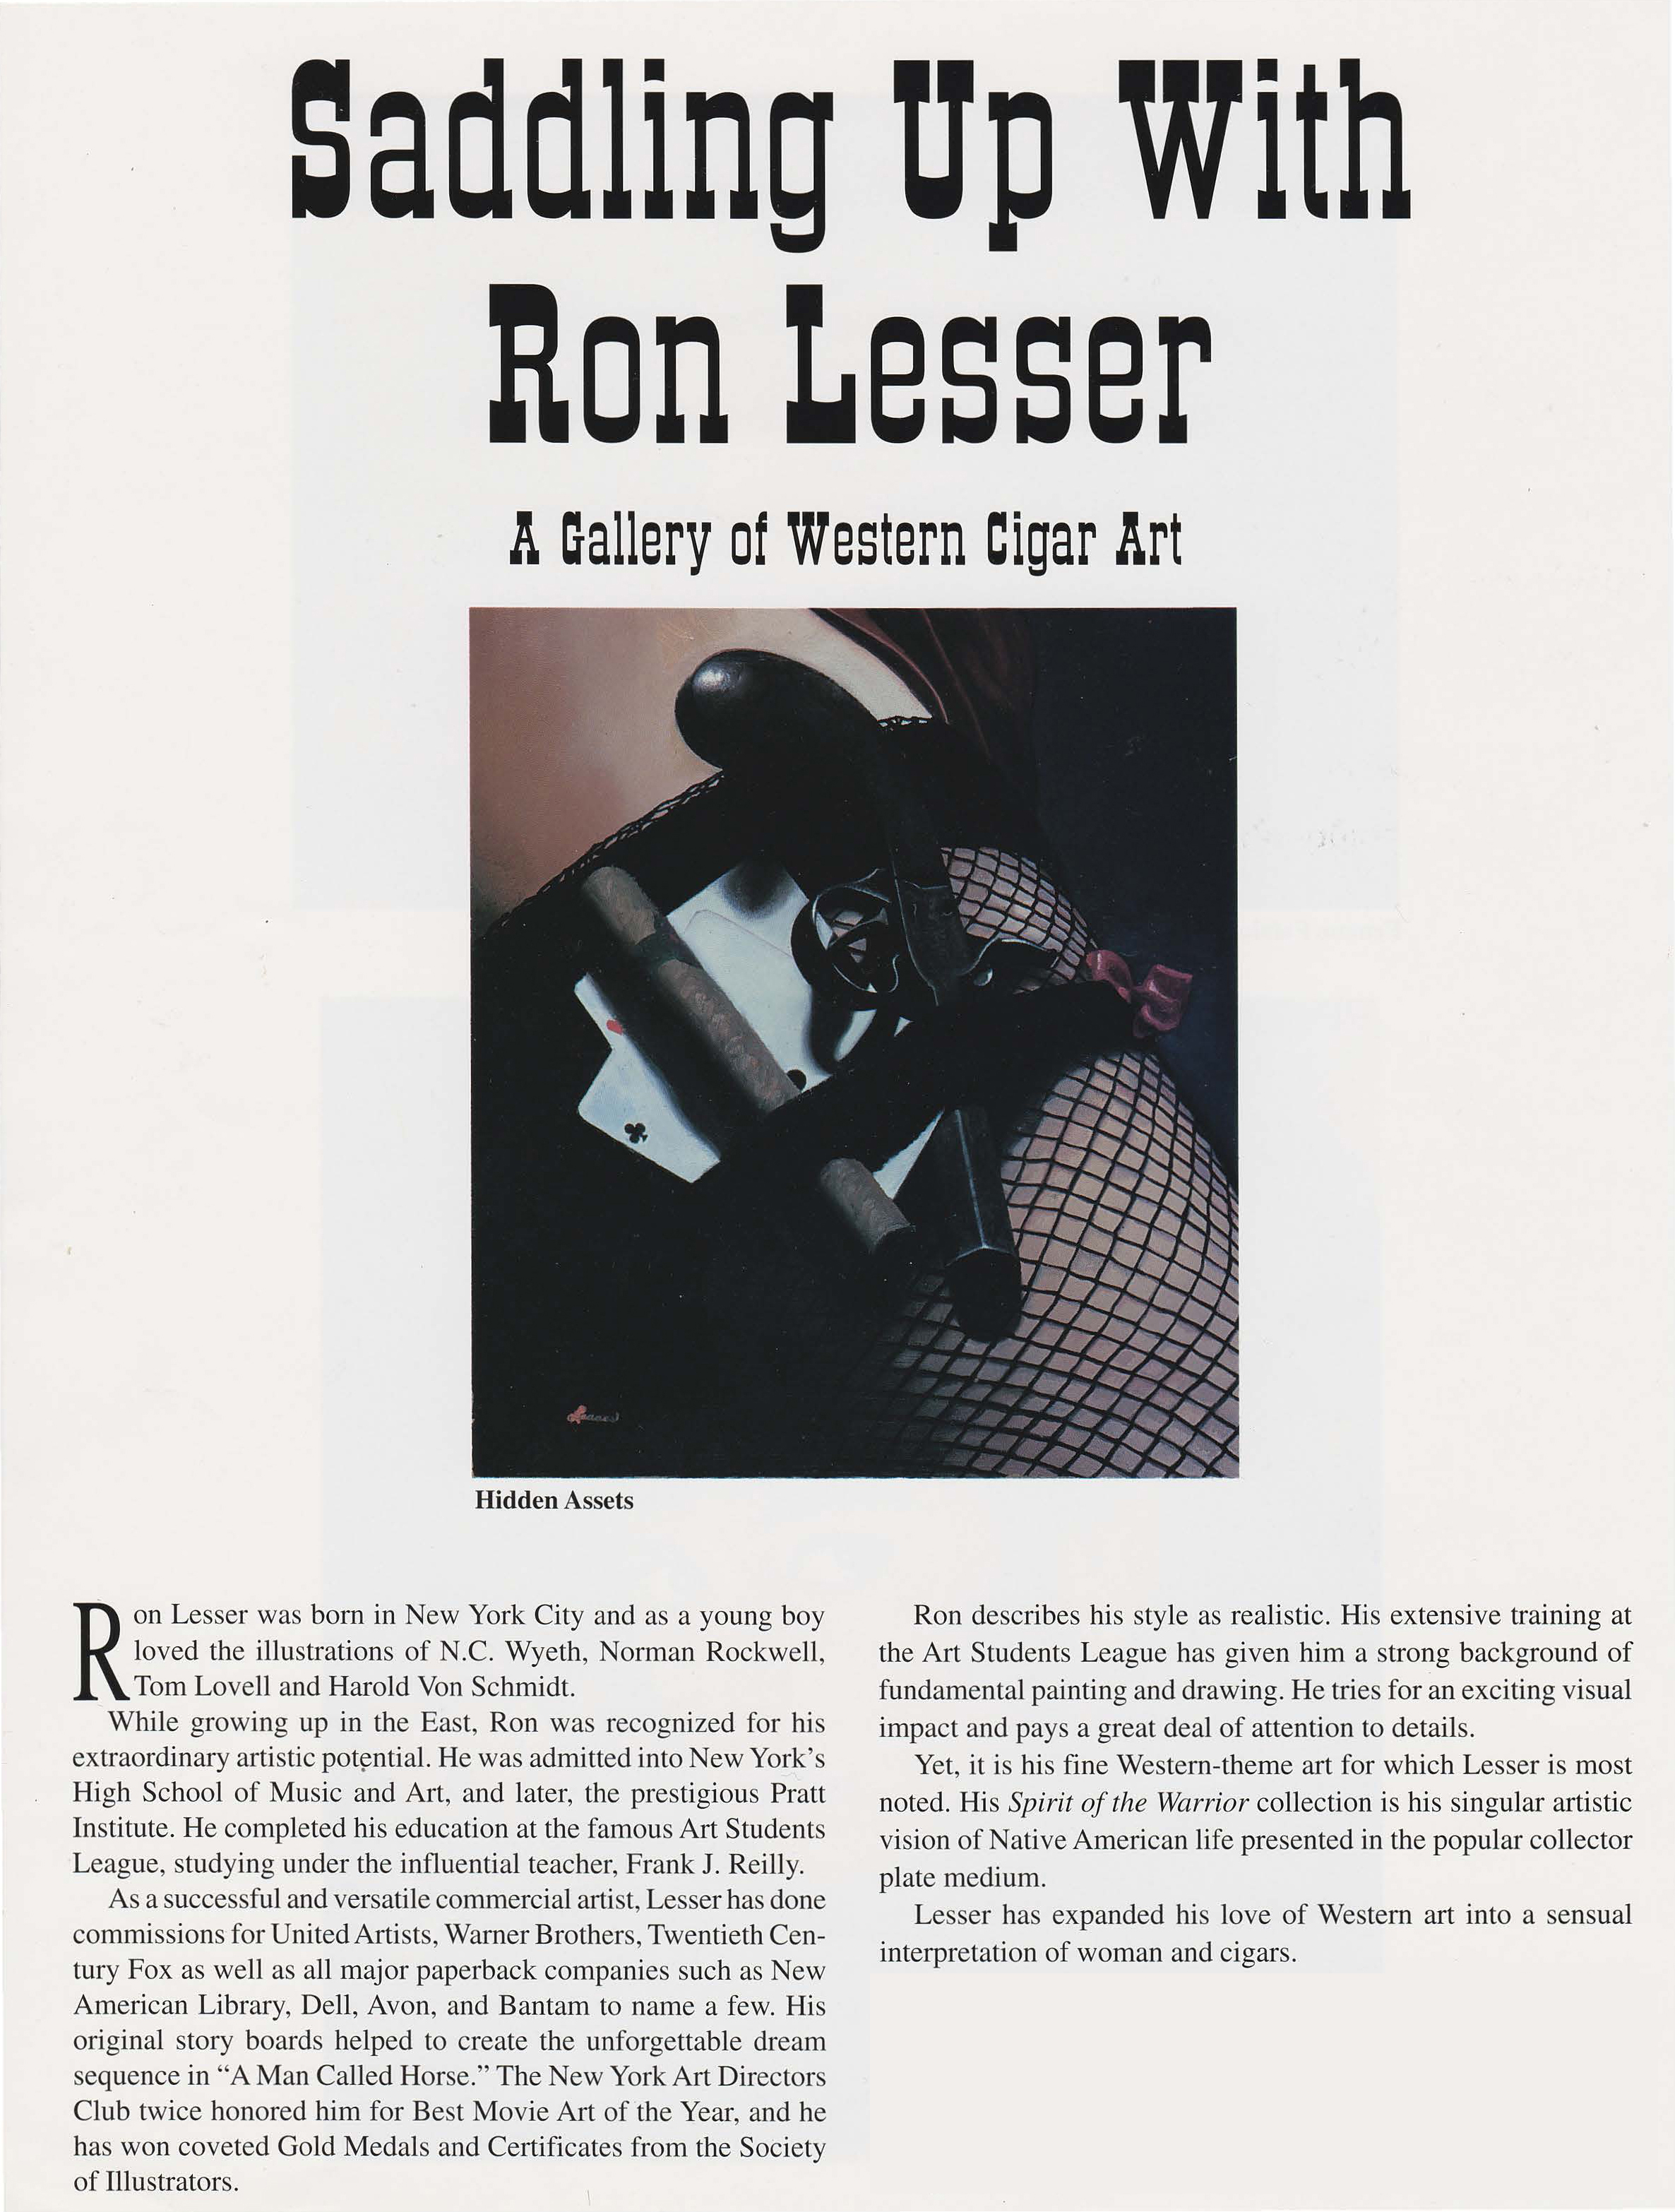 Cigar Smoker magazine story about Ron Lesser - c2003